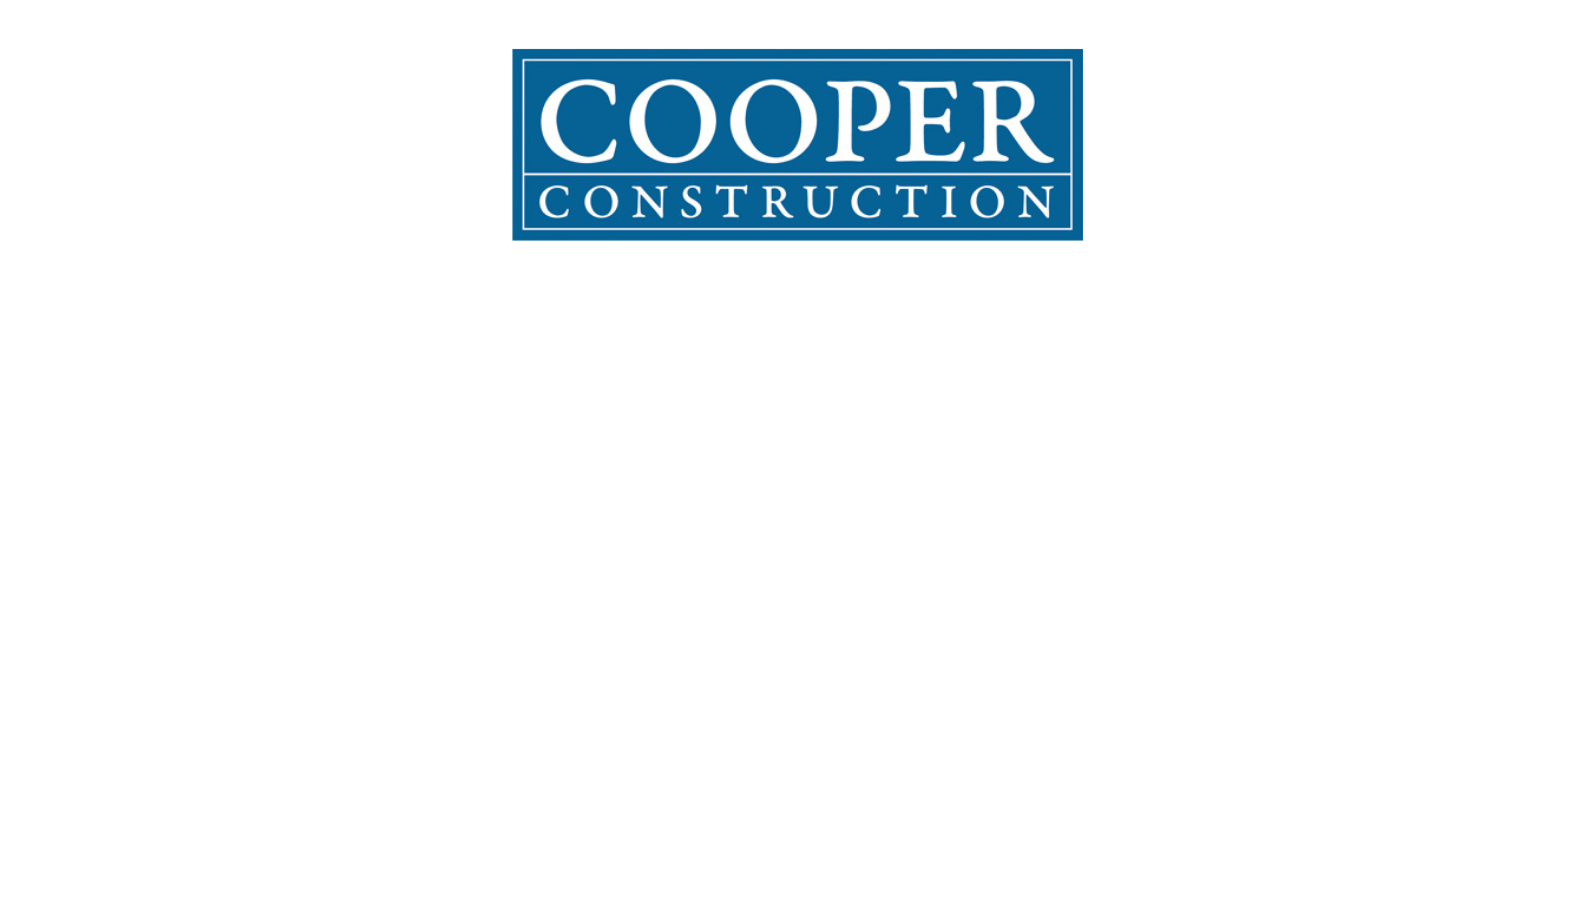 Cooper Construction - Testimonial for Barnett Contracting